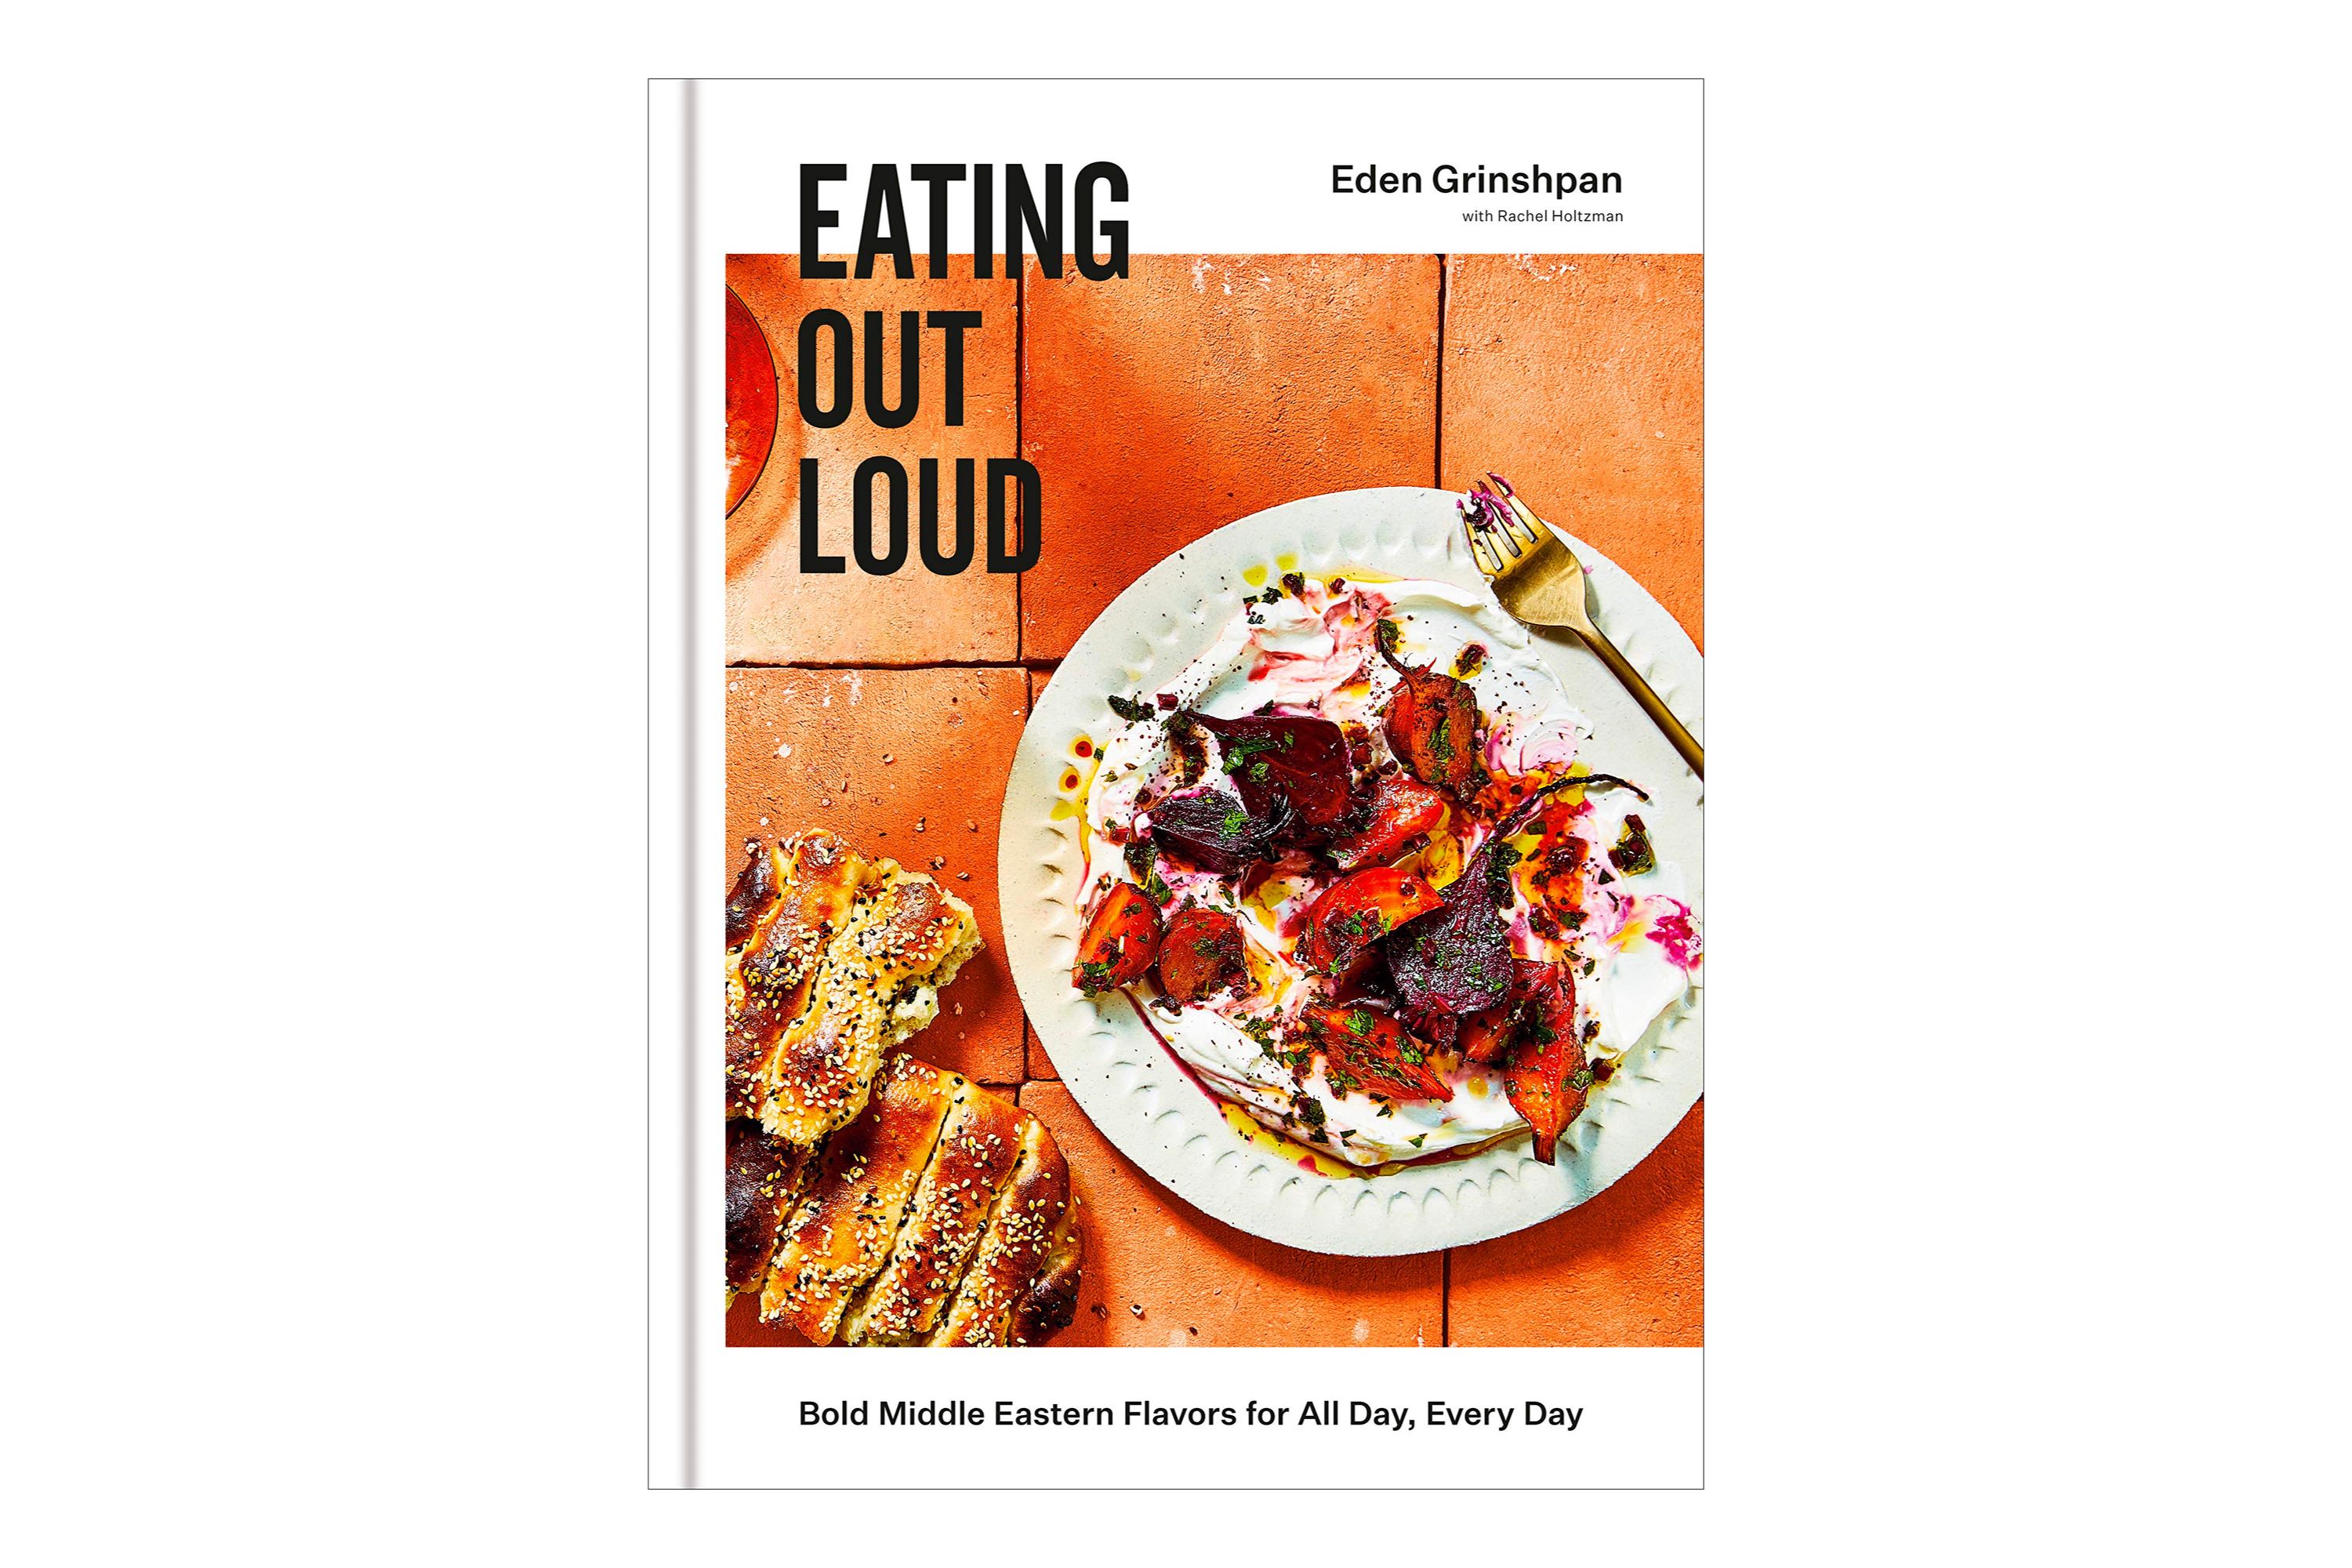 Eating Out Loud / Eden Grinshpan